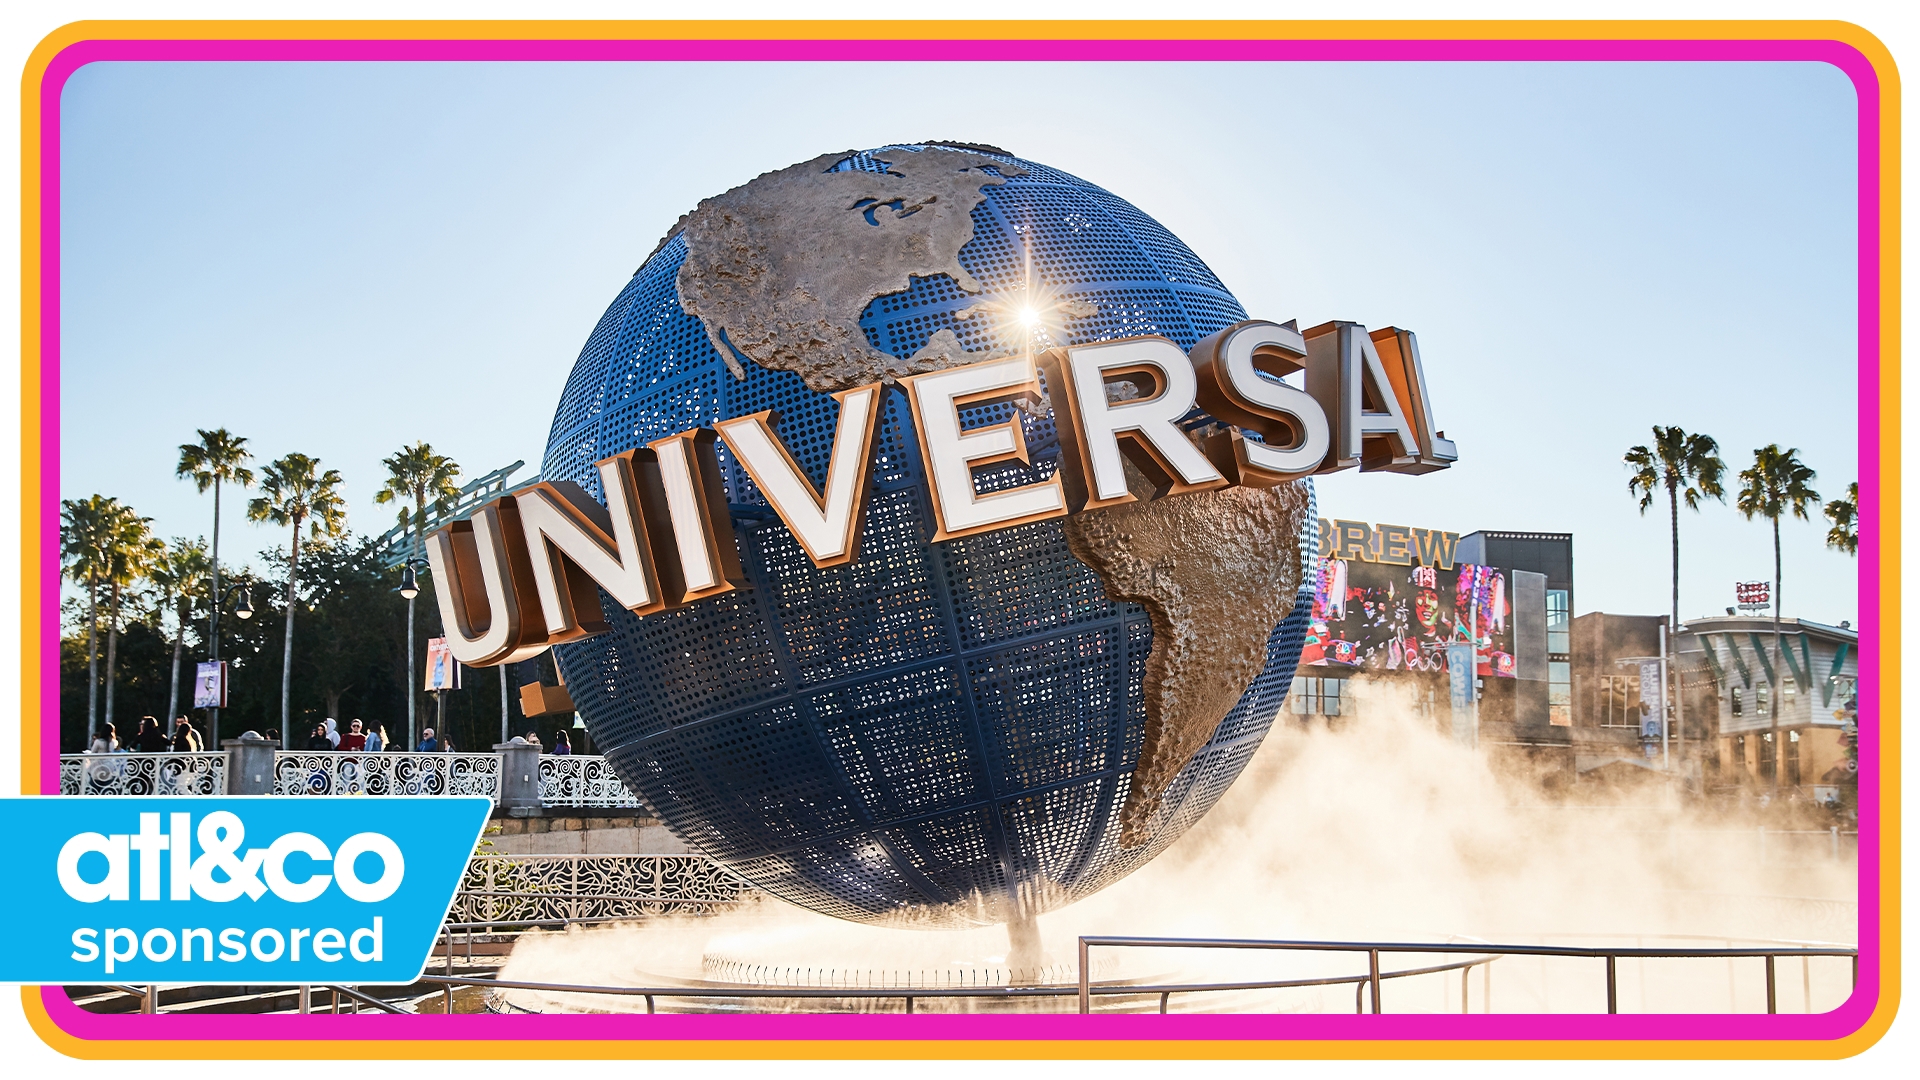 Enter to win a trip to Universal Orlando Resort at 11Alive.com/contest